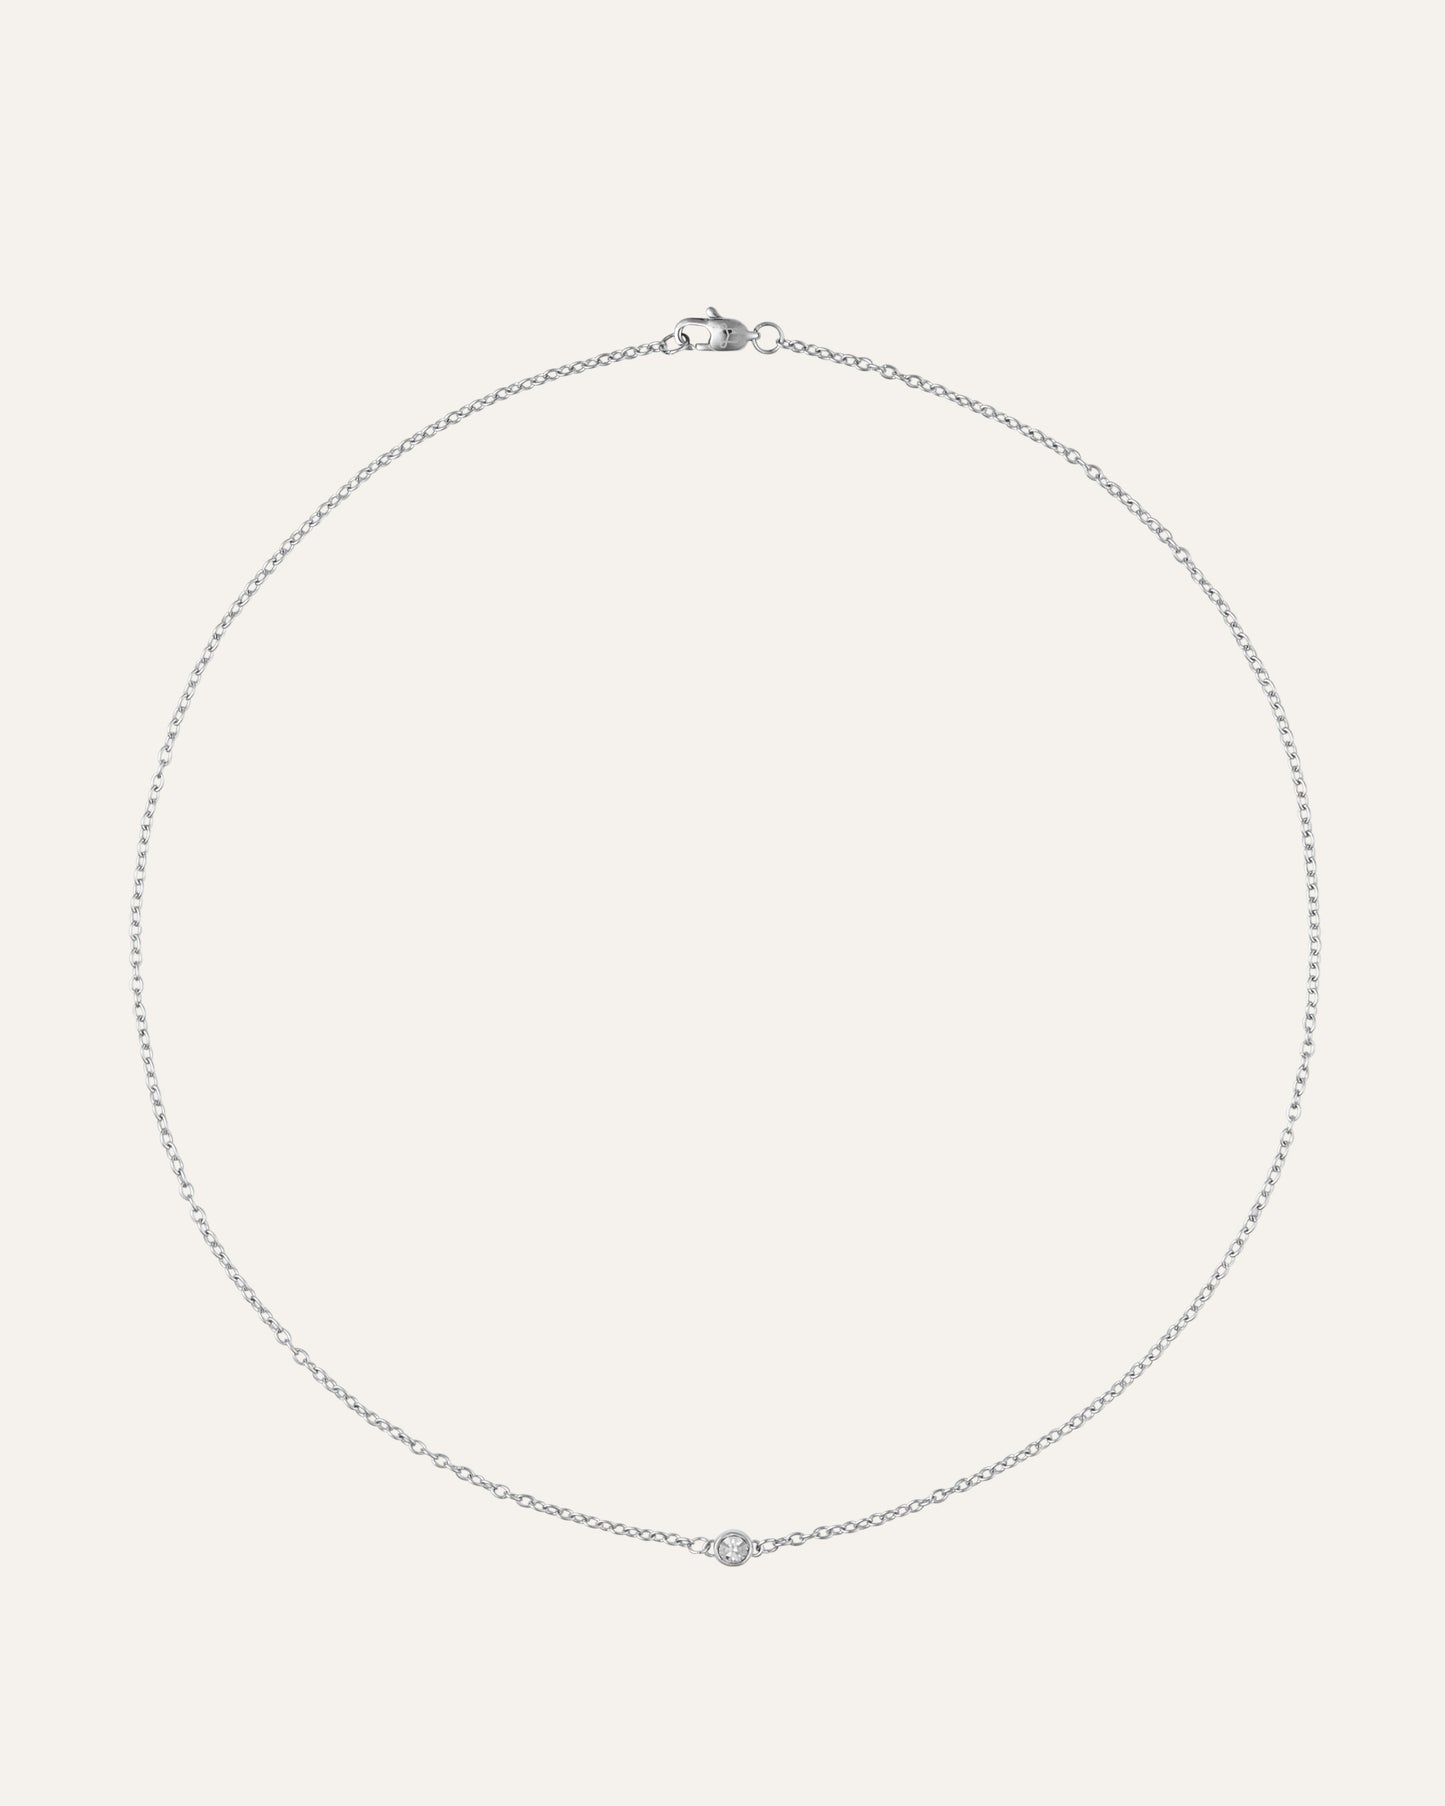 Thin diamond necklace silver